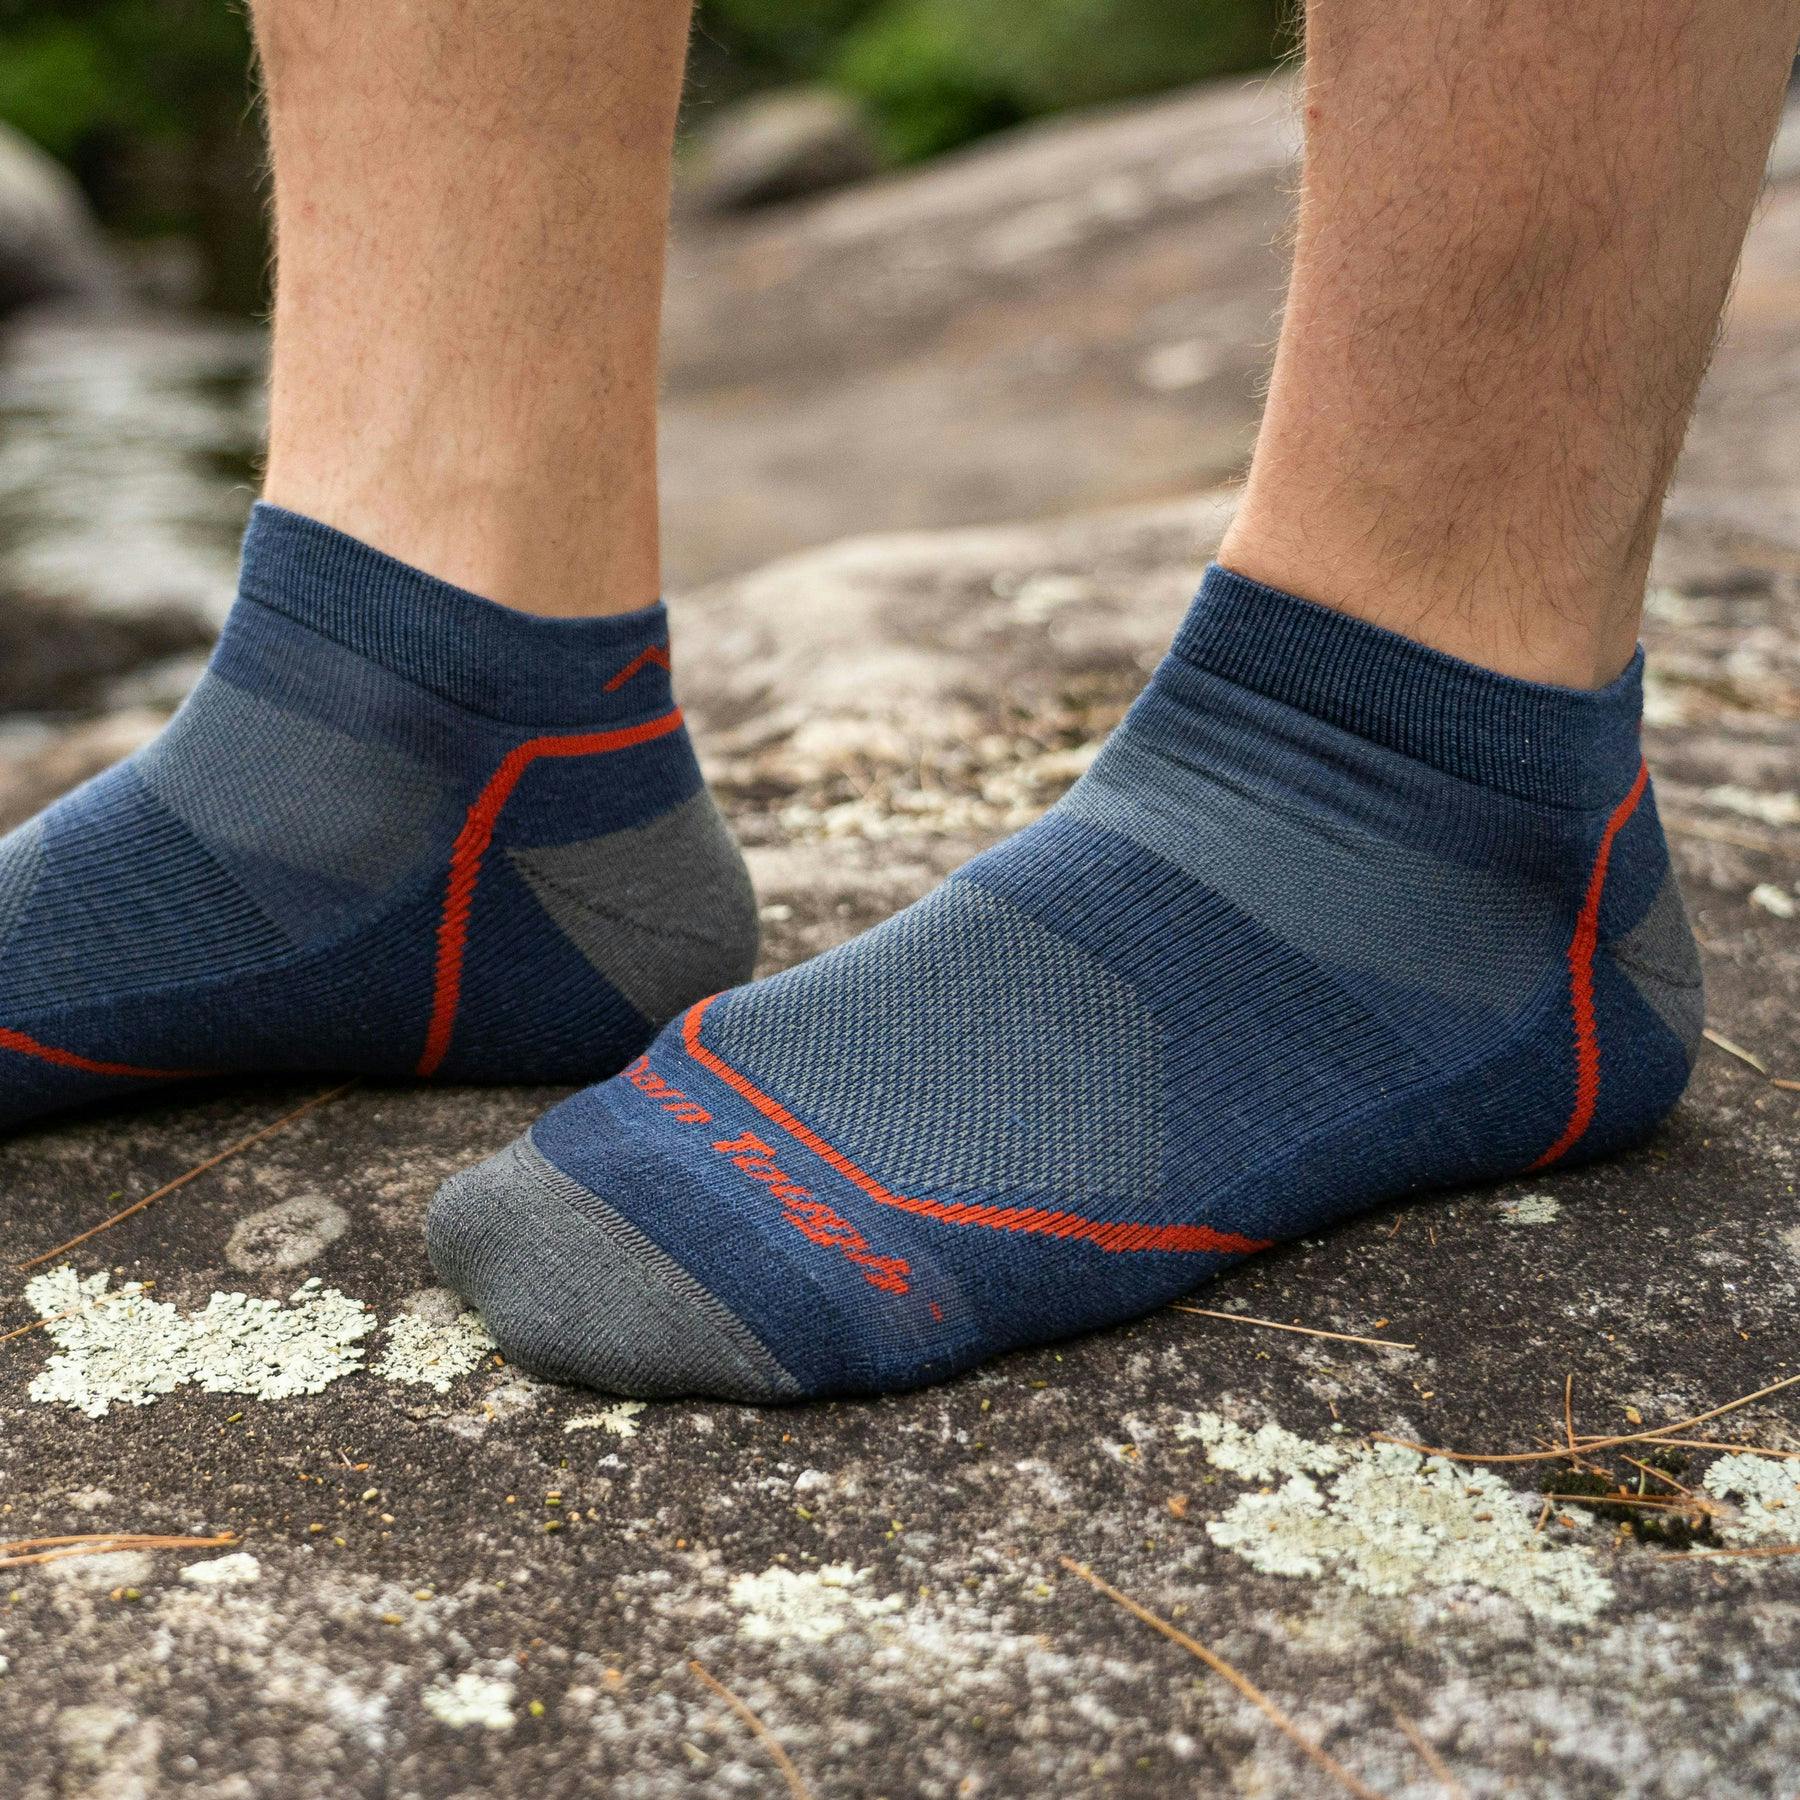 Darn Tough Men's Light Hiker No Show Lightweight Hiking Socks with Cushion